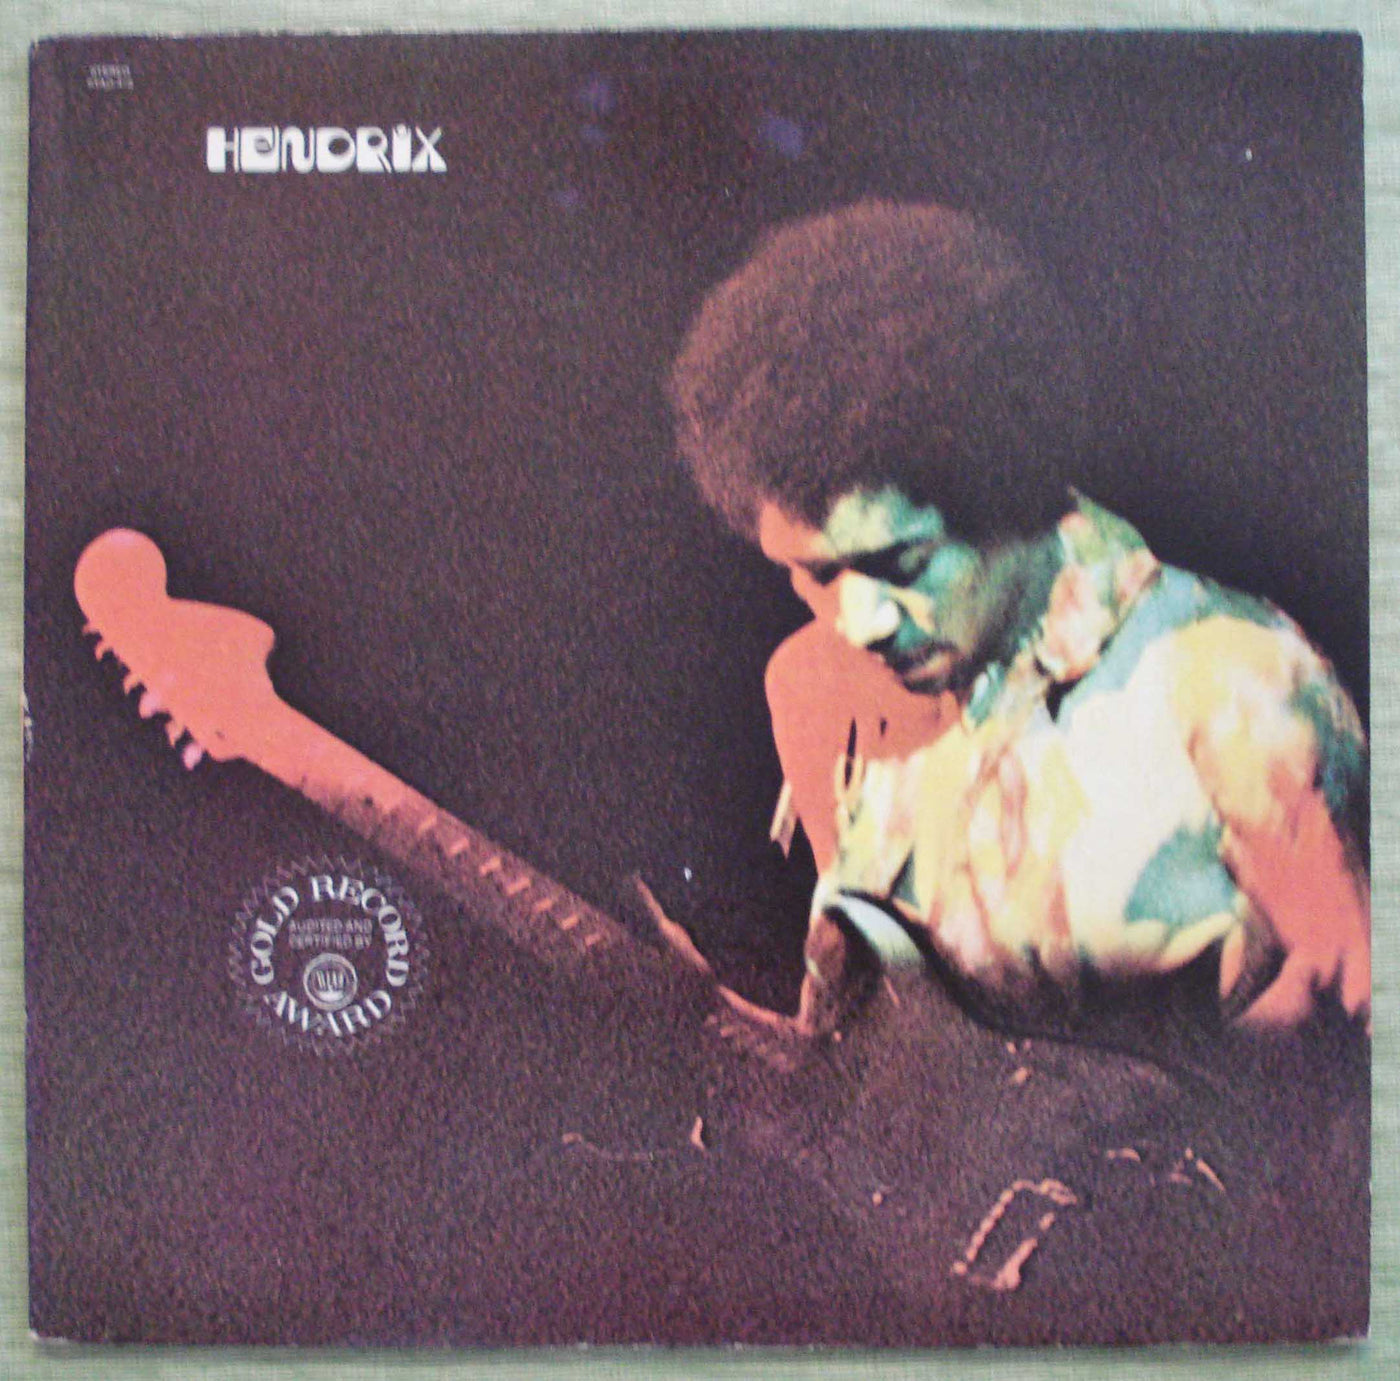 Jimi Hendrix - The Band of Gypsys (1970) Vinyl LP 33rpm STAO-472